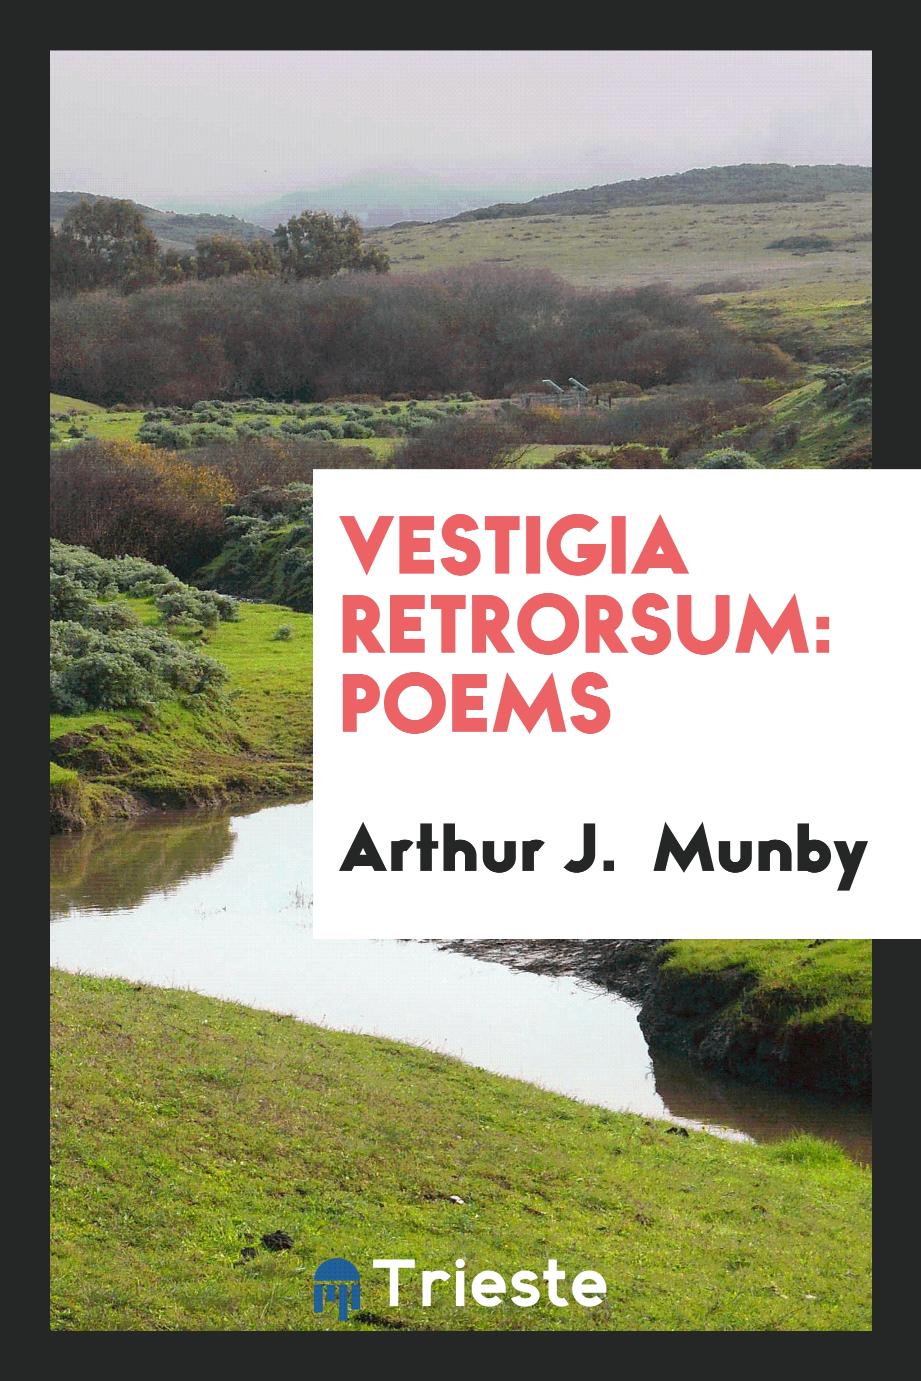 Vestigia Retrorsum: Poems